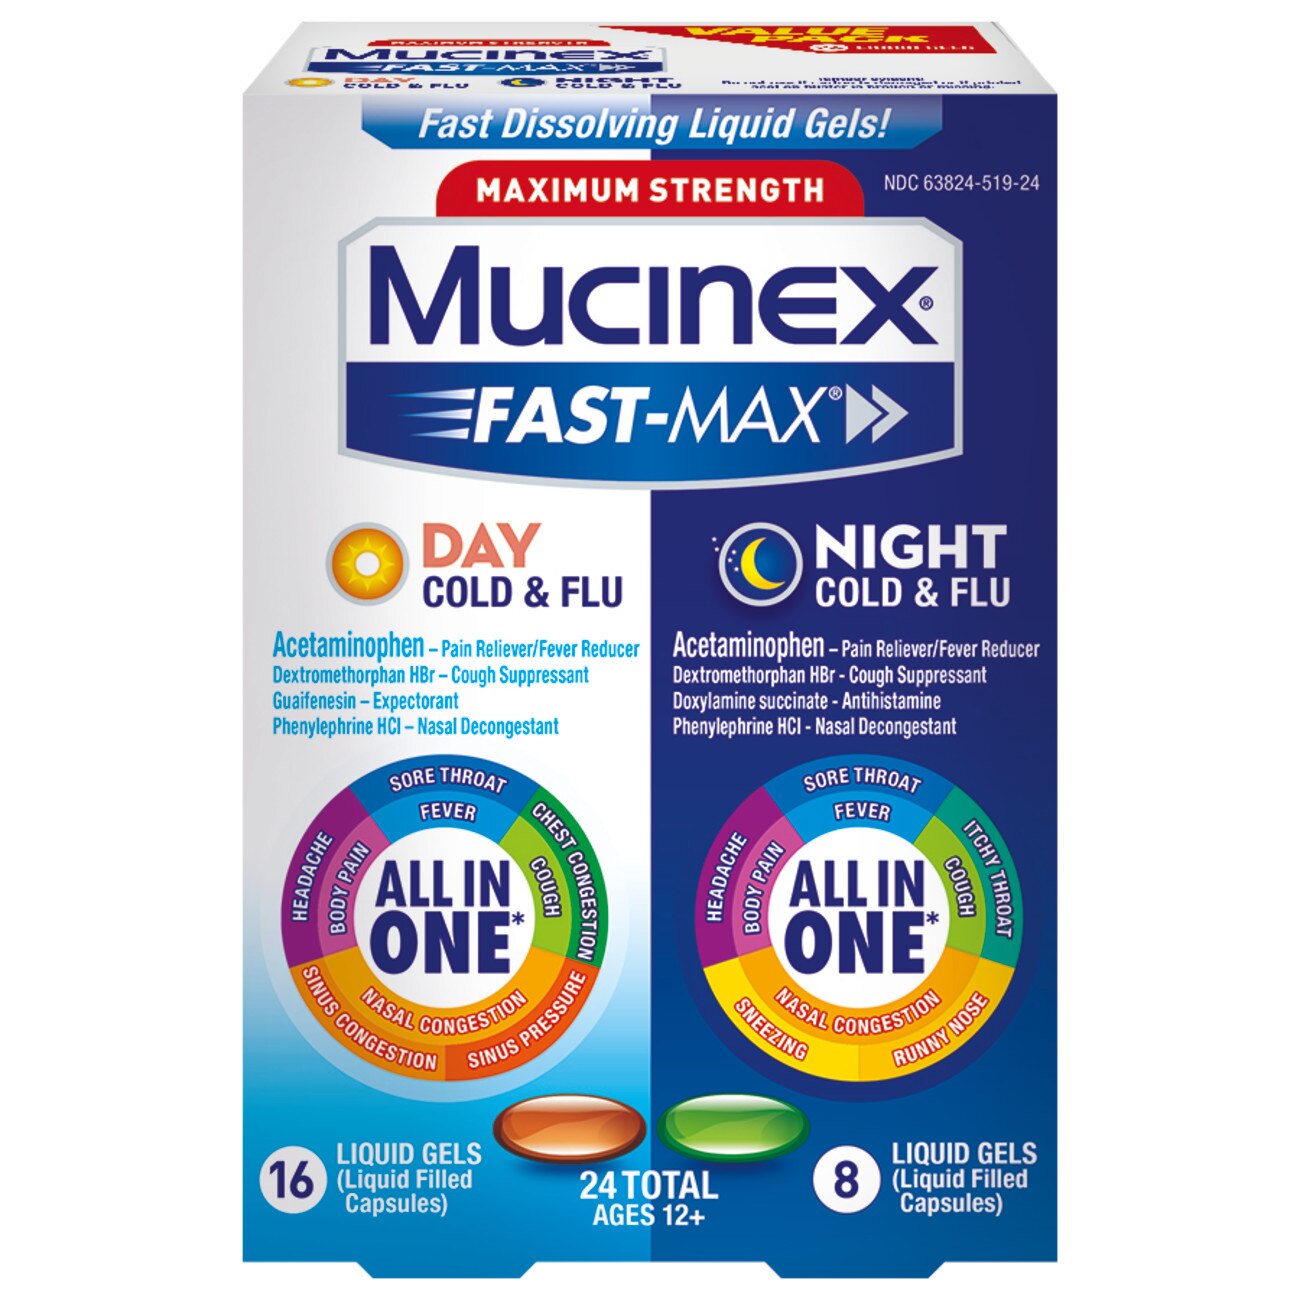 Mucinex Fast-Max Liquid Gels - Day Severe Cold & Night Cold & Flu 24/24 CT. , CVS